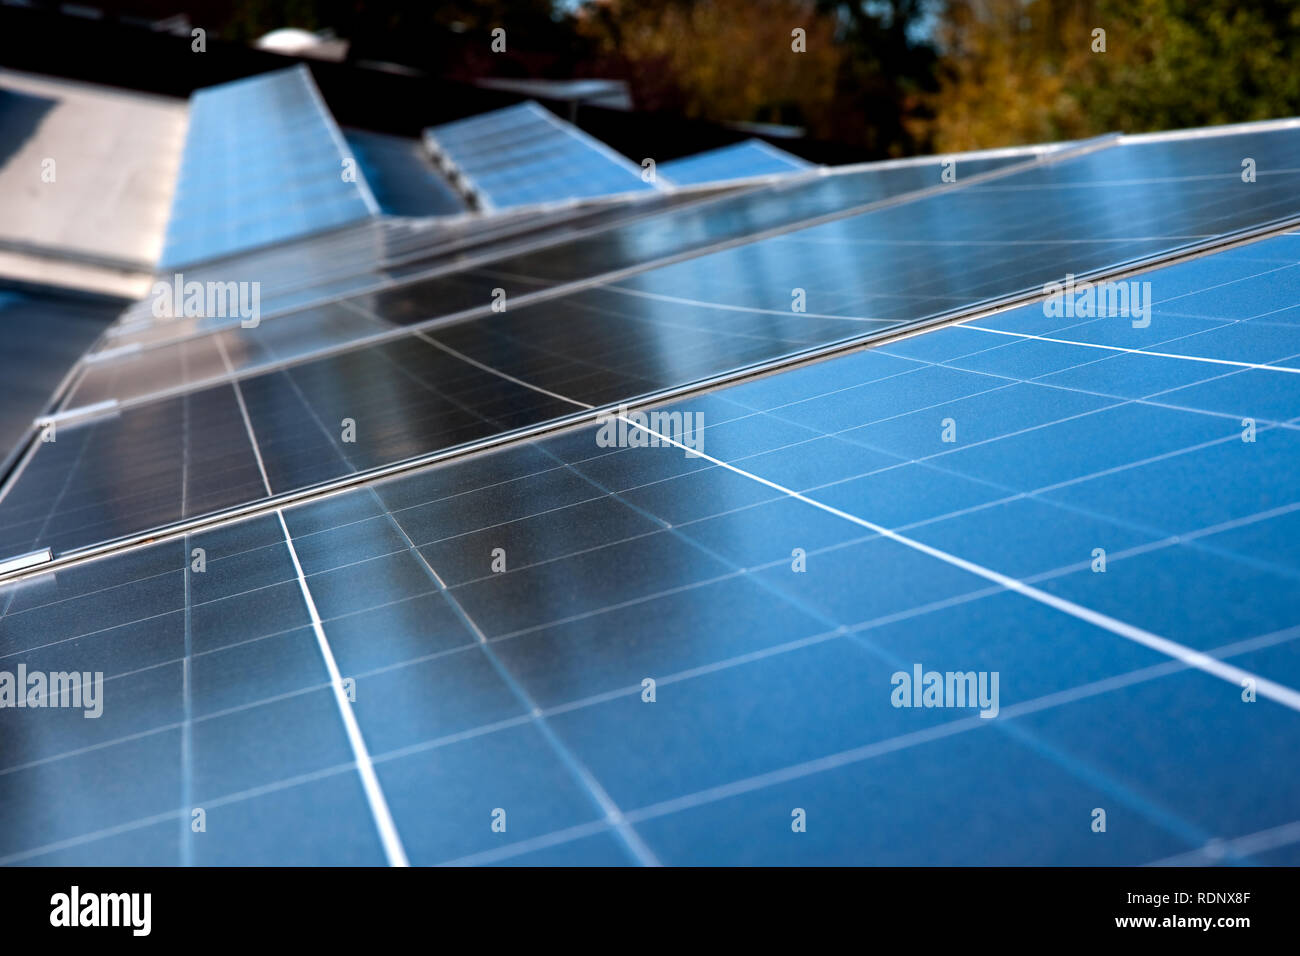 Solar Stock Photo